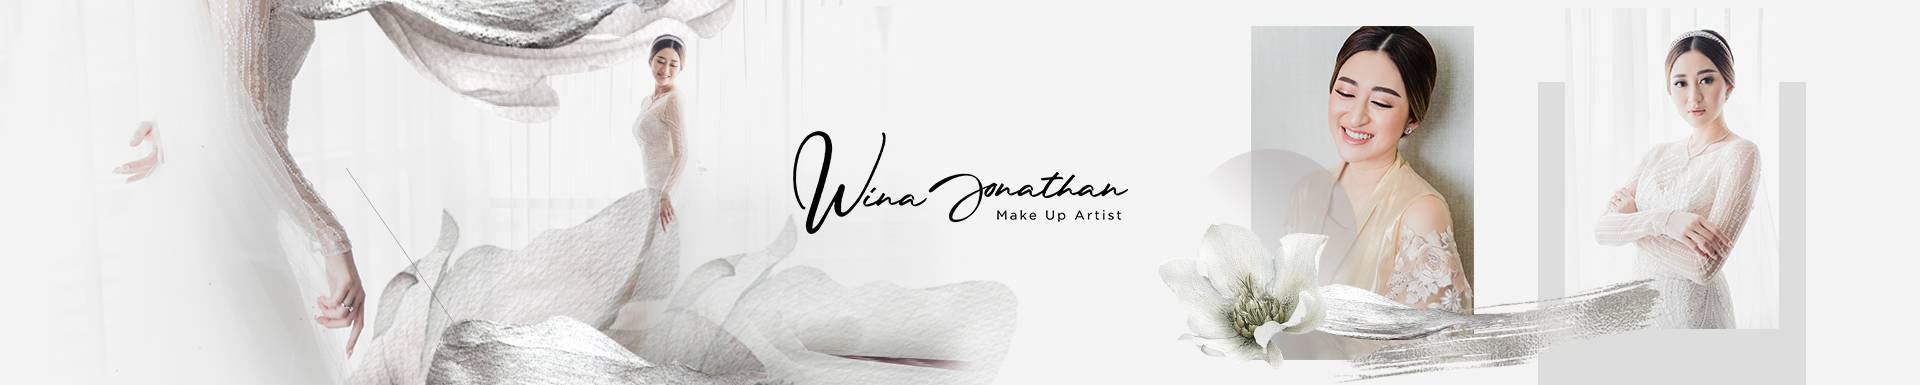 Wina Jonathan Make Up